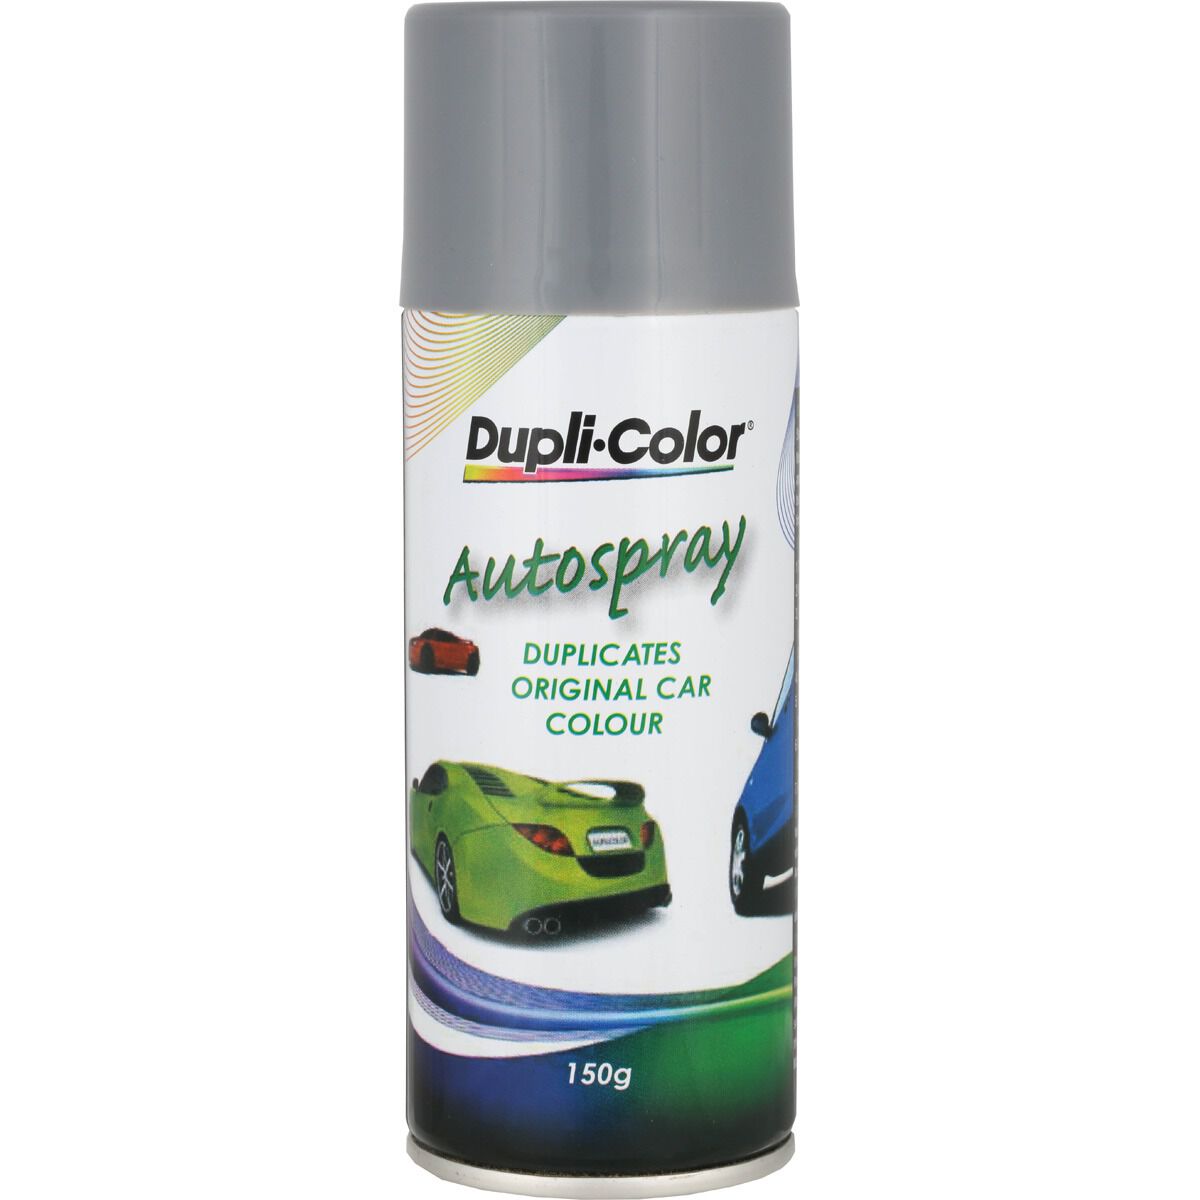 Dupli-Color Touch-Up Paint Grey Primer, DS106 - 150g, , scaau_hi-res